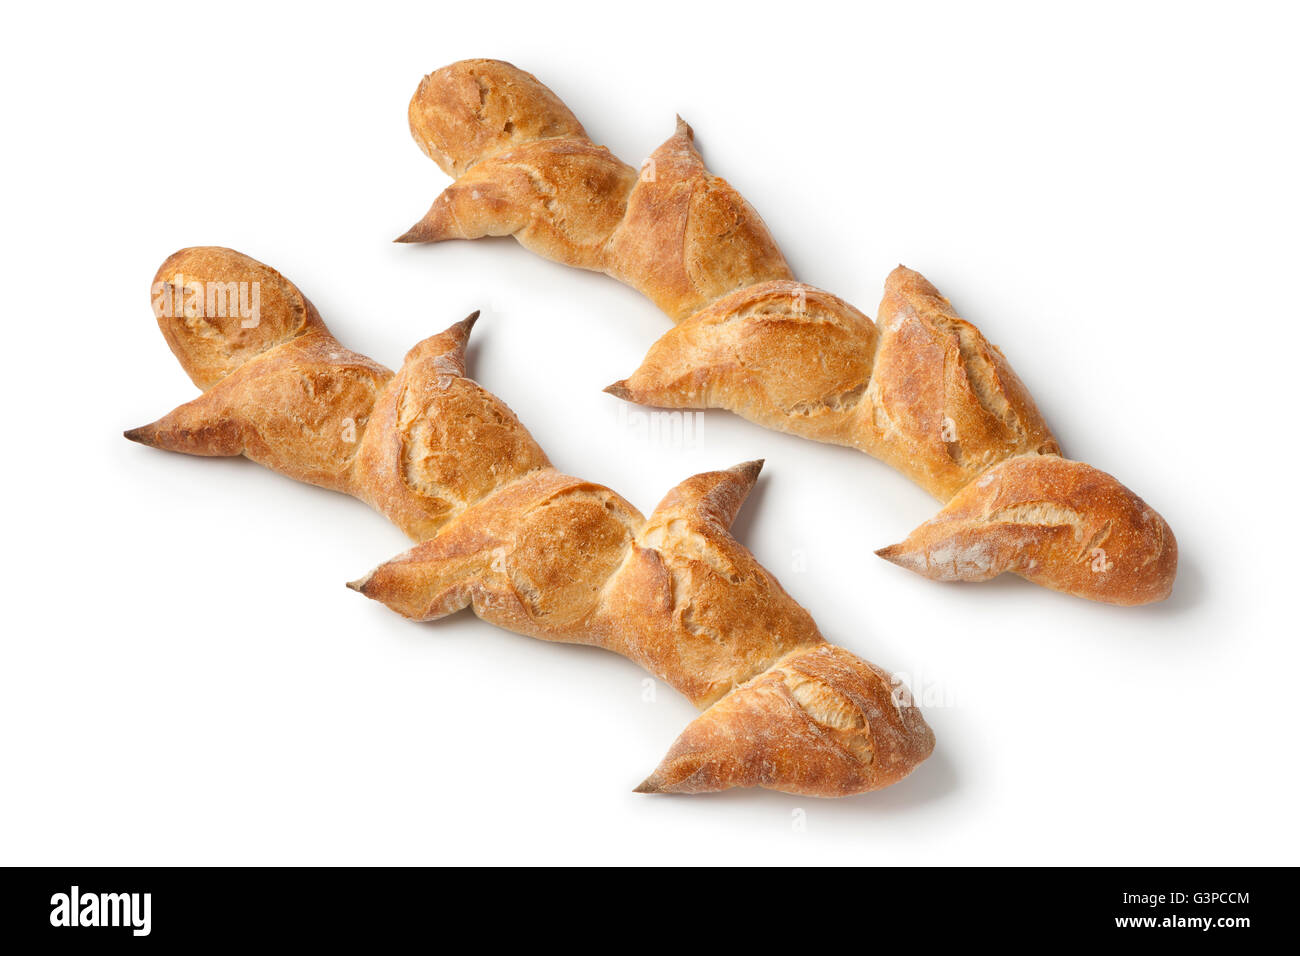 Fresh baked French pain d'epi or wheat stalk bread on white background Stock Photo